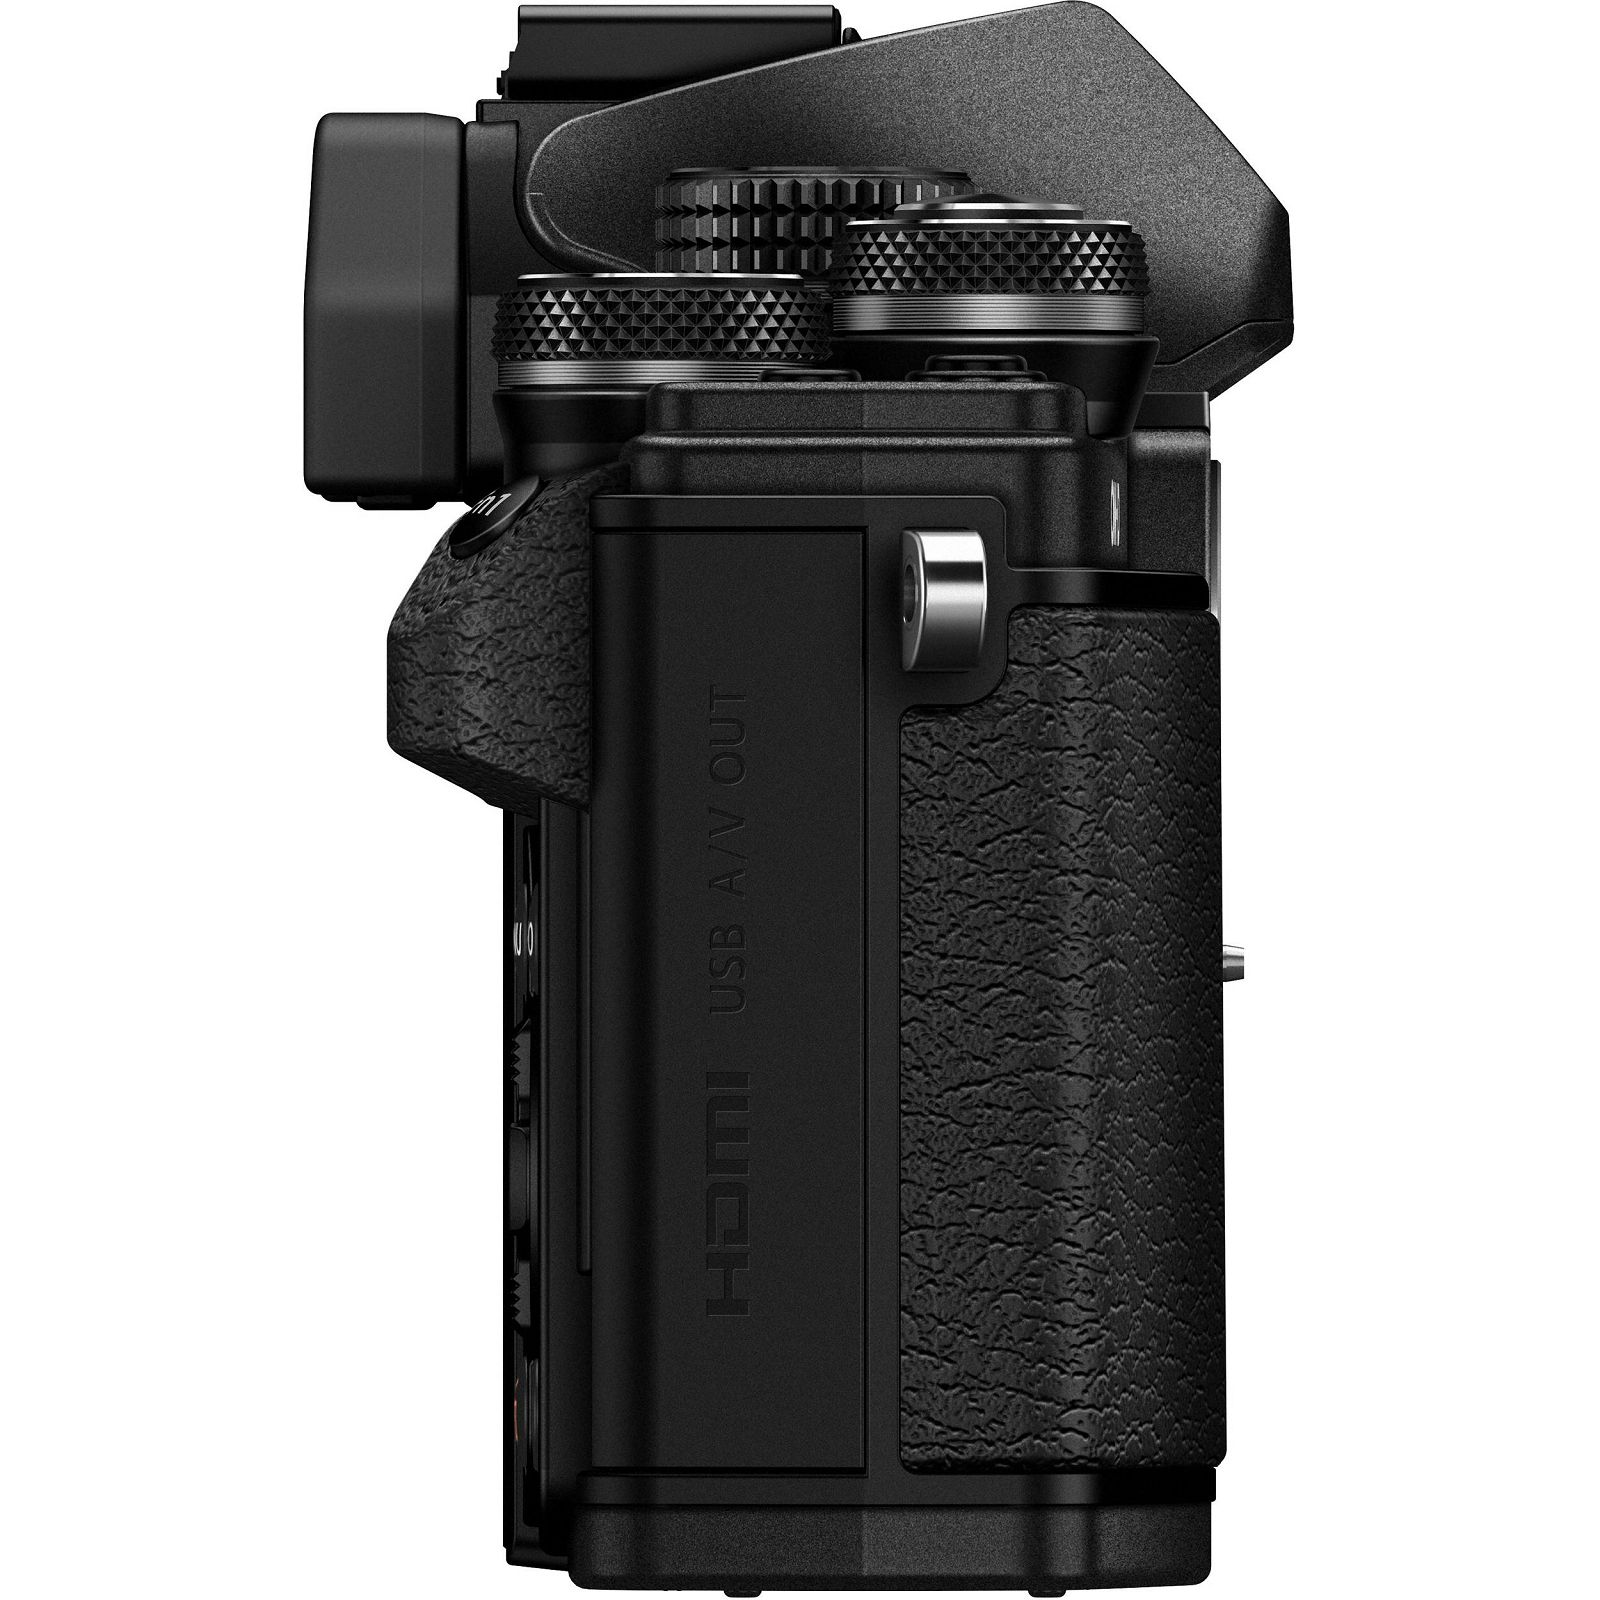 Olympus E-M10 II + 14-42 Black crni E-M10II 1442 IIR Kit blk/blk 14-42mm Mark EZ-M1442 IIR black incl. Charger + Battery Micro Four Thirds MFT OM-D Camera digitalni fotoaparat V207051BE000